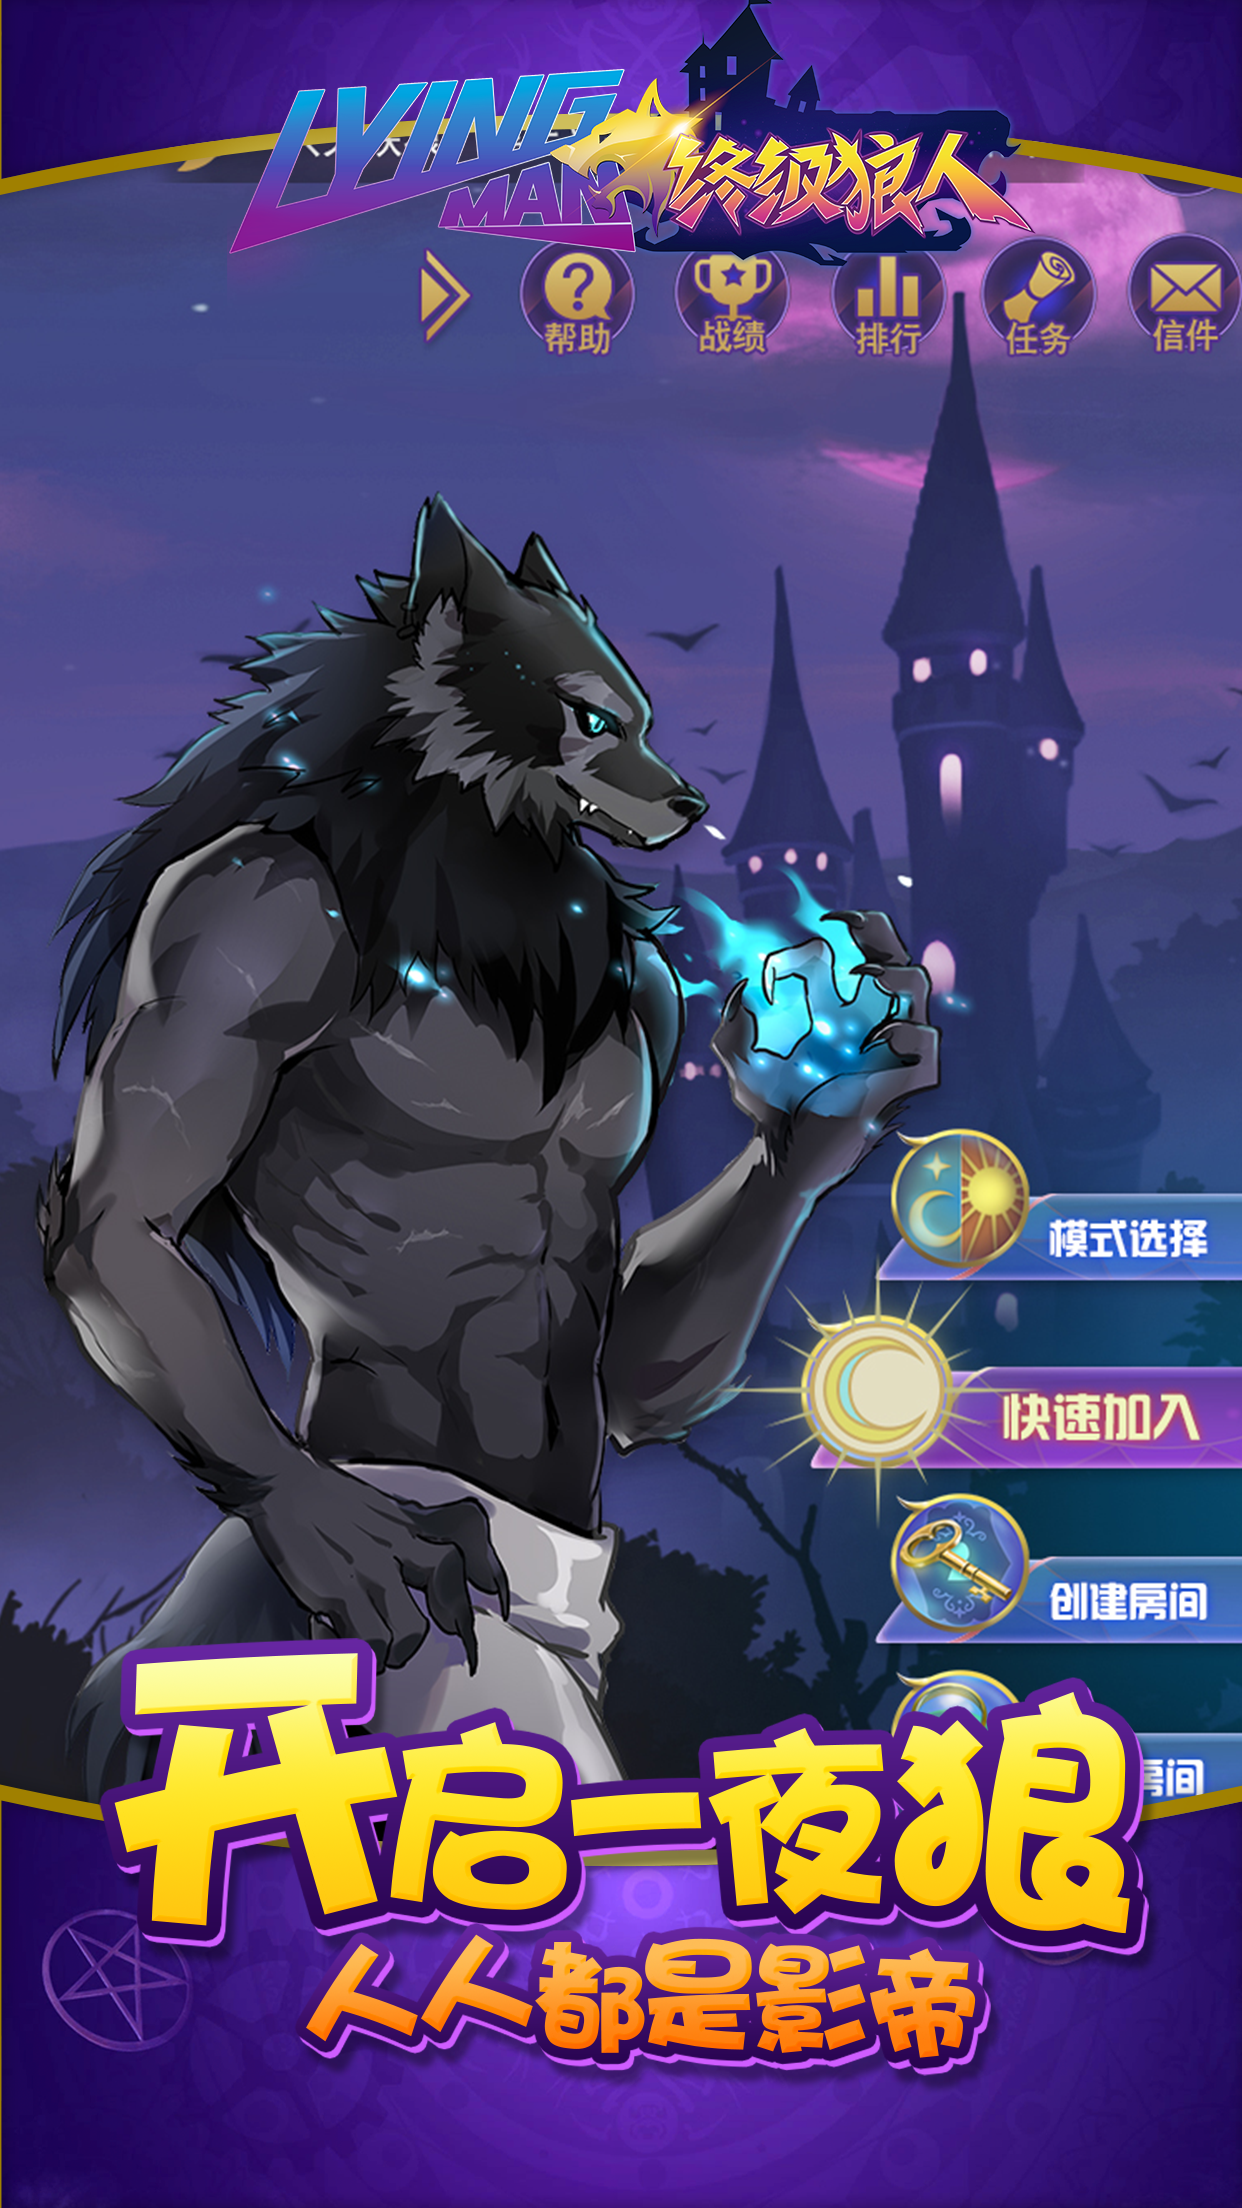 Screenshot 1 of werewolf muktamad 1.0.5